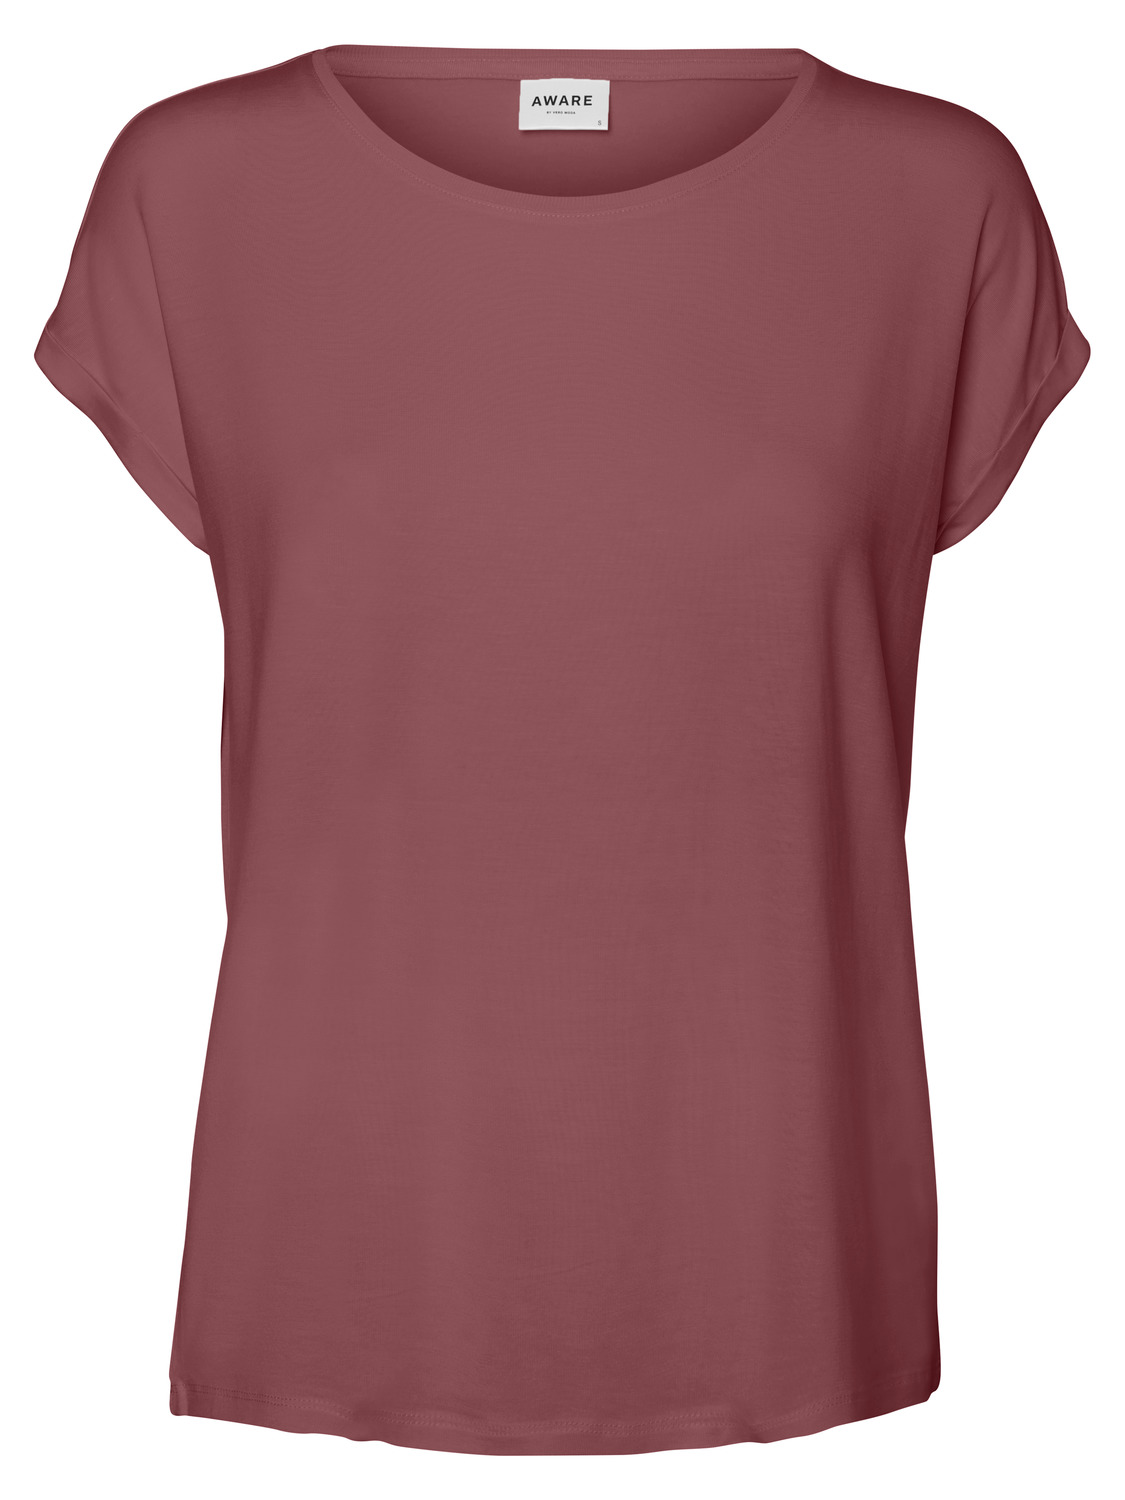 FINAL SALE- AWARE | Ava T-Shirt, ROSE BROWN, large